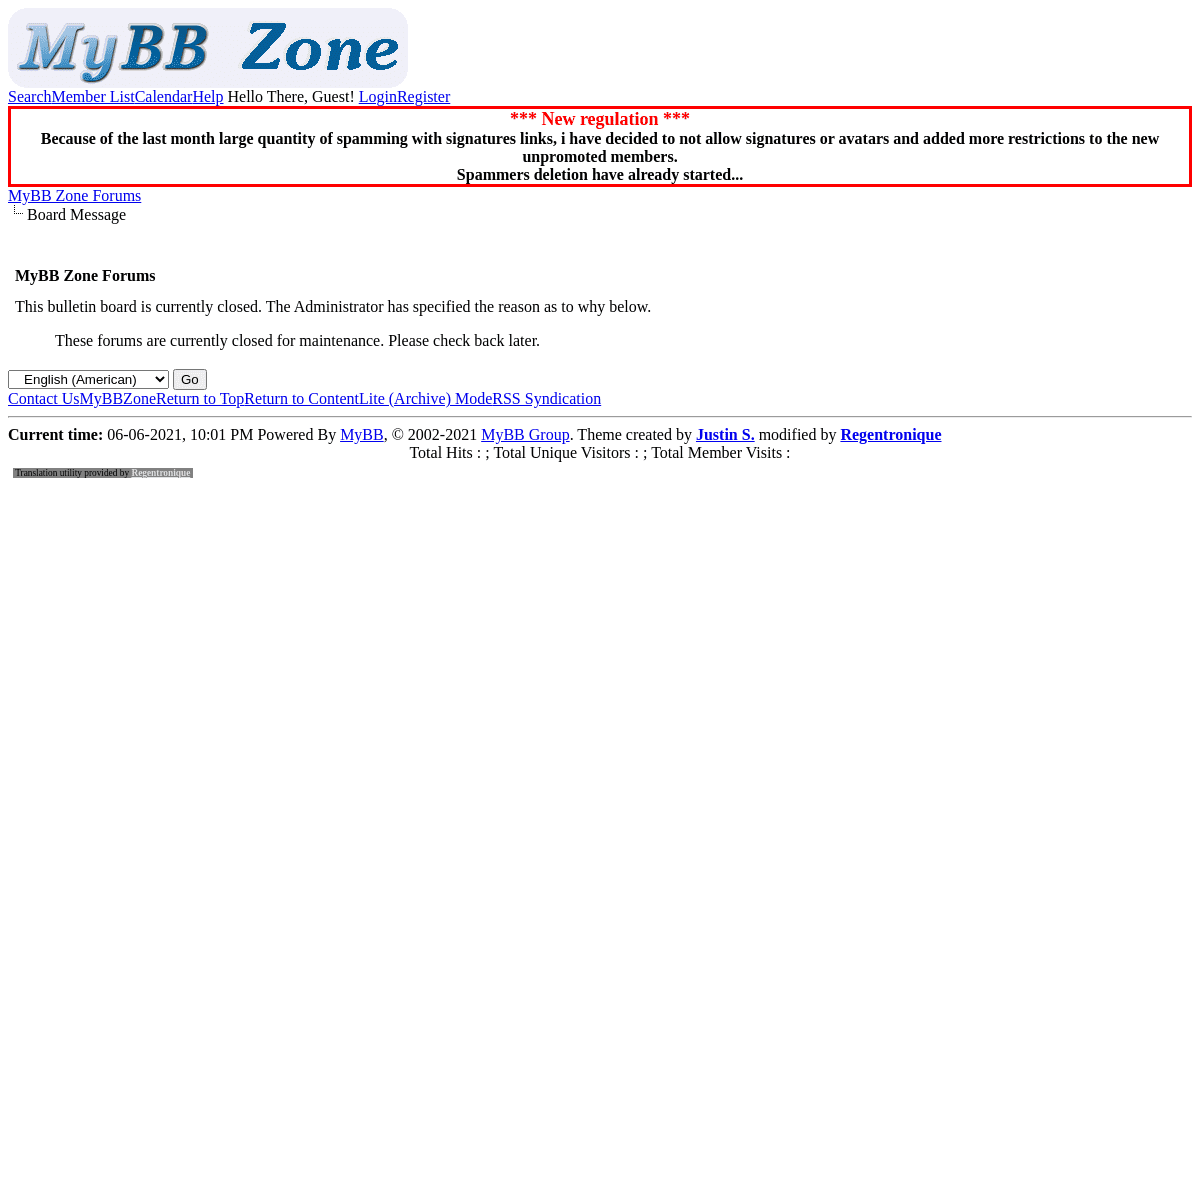 A complete backup of https://mybbzone.com